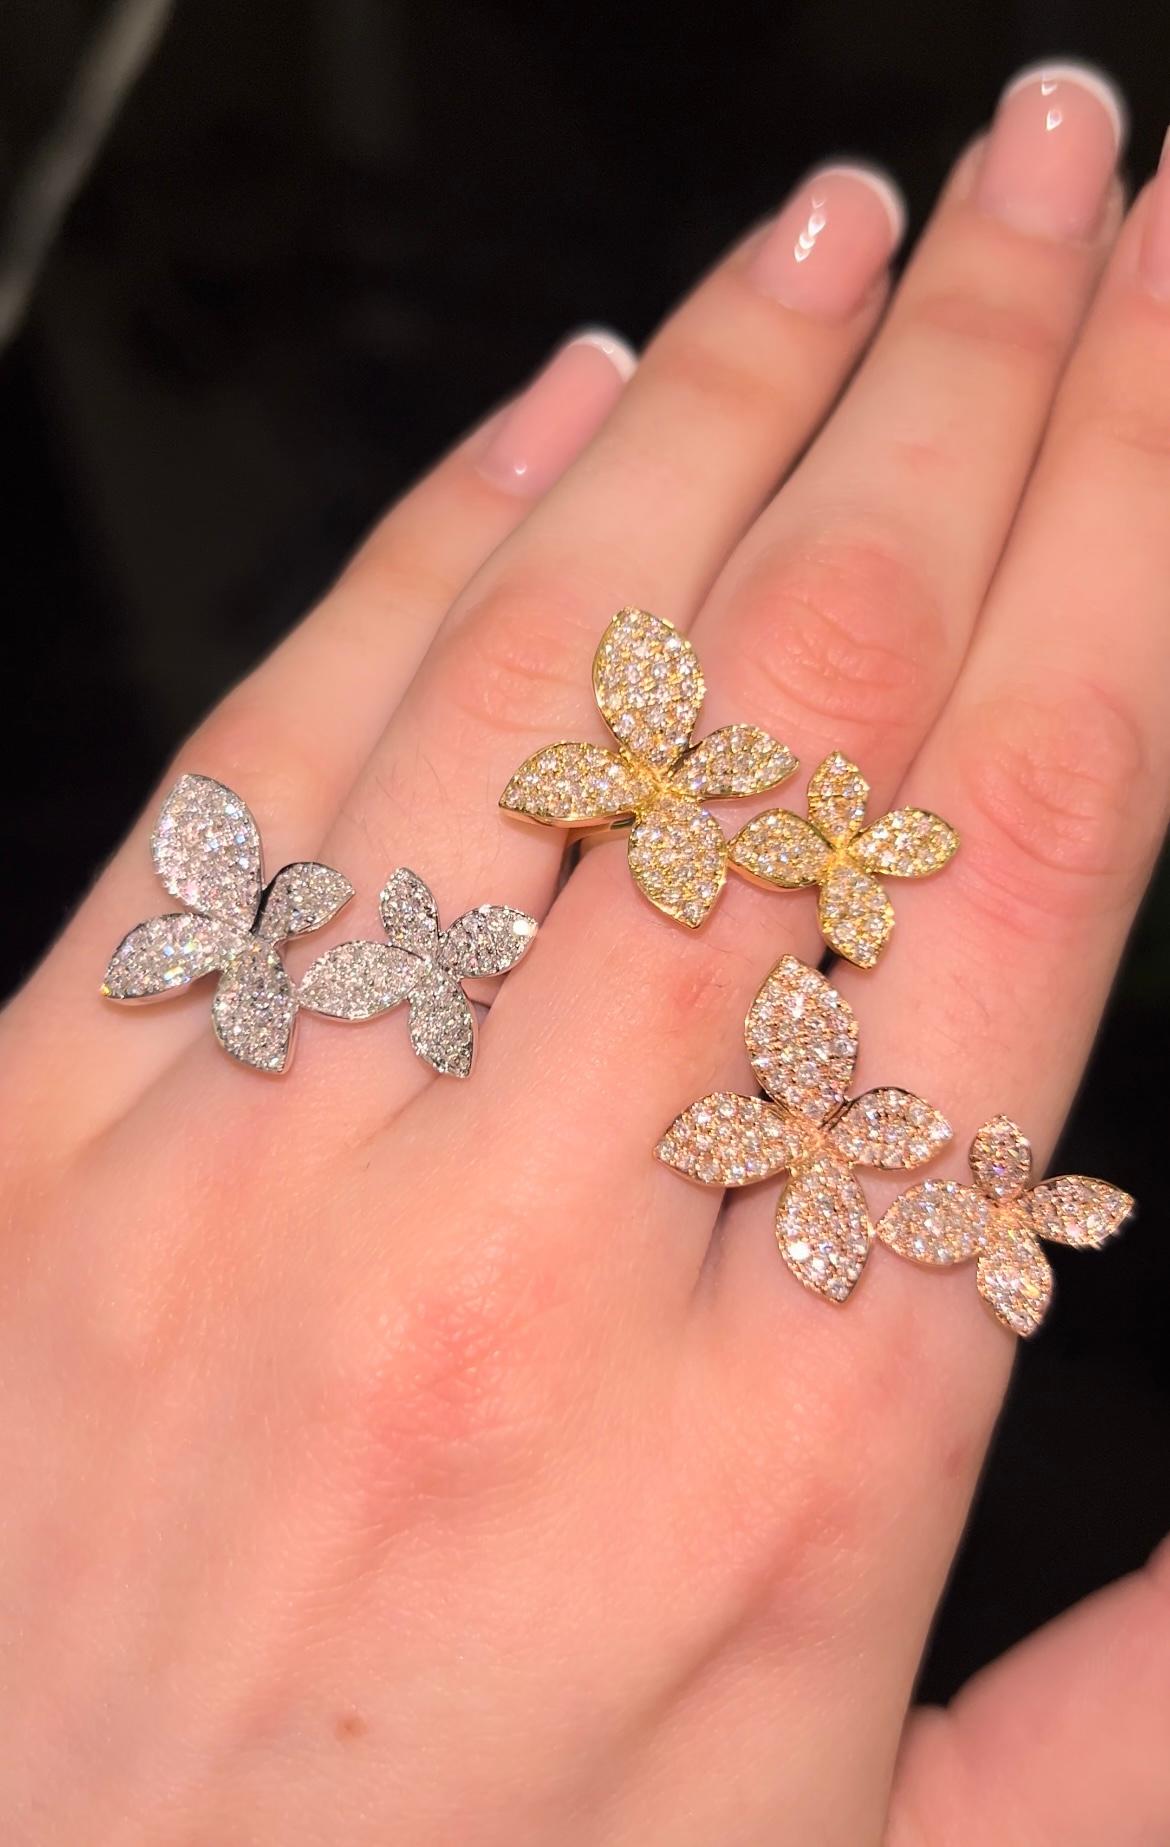 Round Cut Elizabeth Fine Jewelry 0.97 Carat Diamond Double Flower Ring in 18K White Gold For Sale